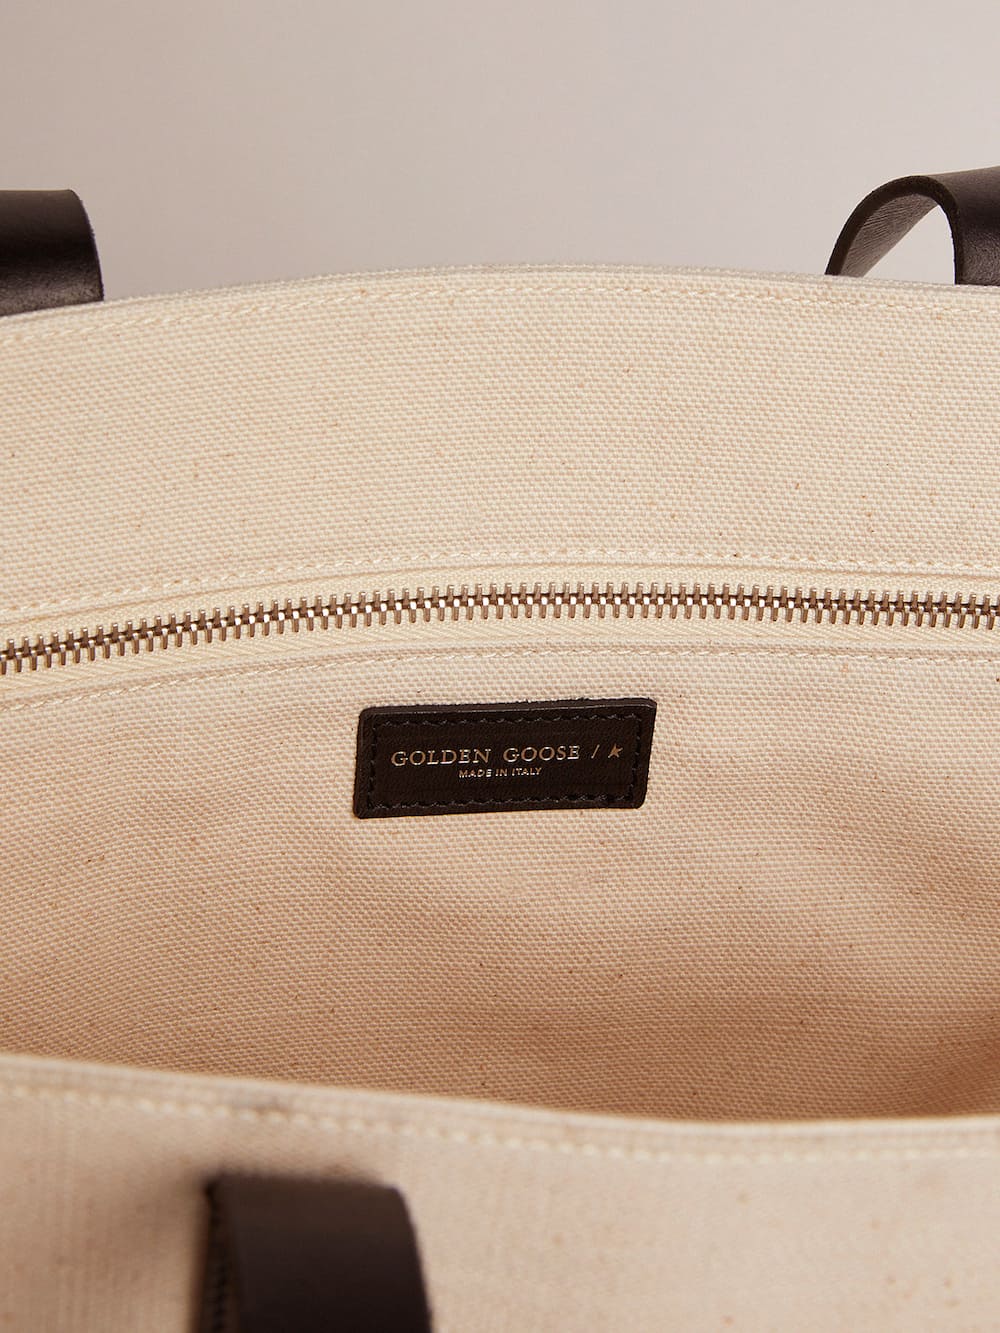 Golden Goose - California Bag im Hochformat mit kontrastierendem Collageprint in 